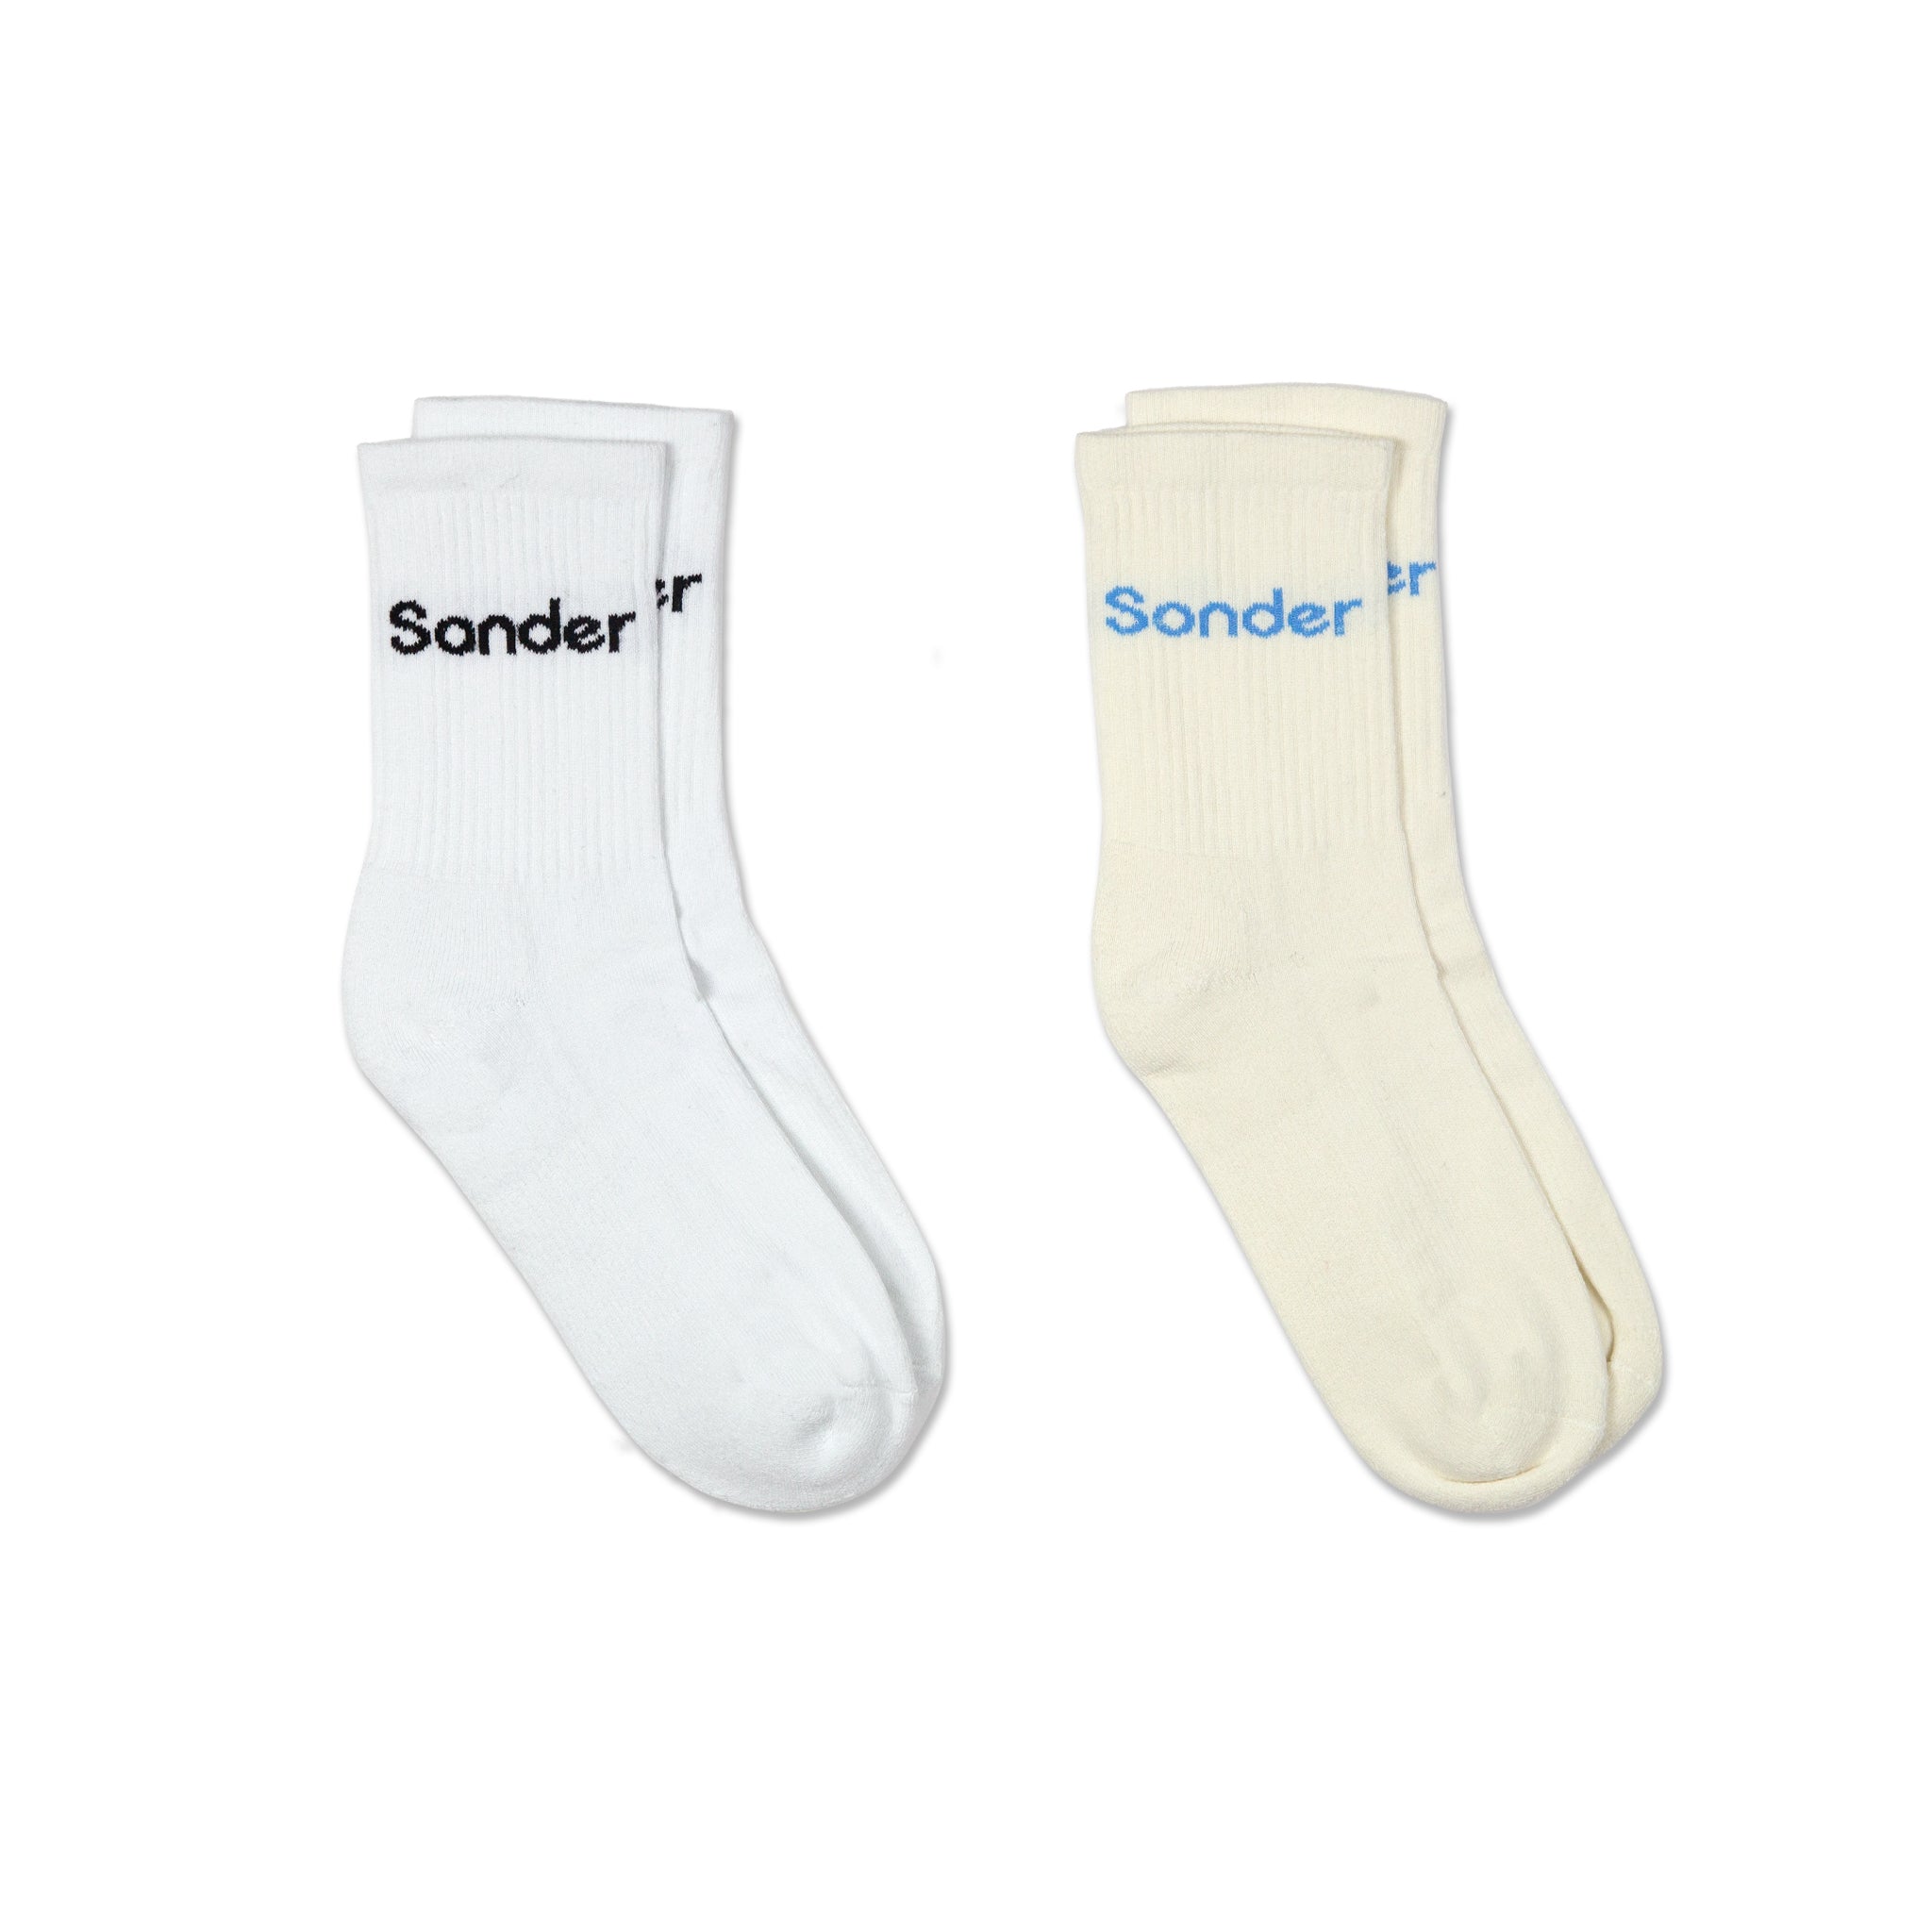 Sonder Sock Bundle #1